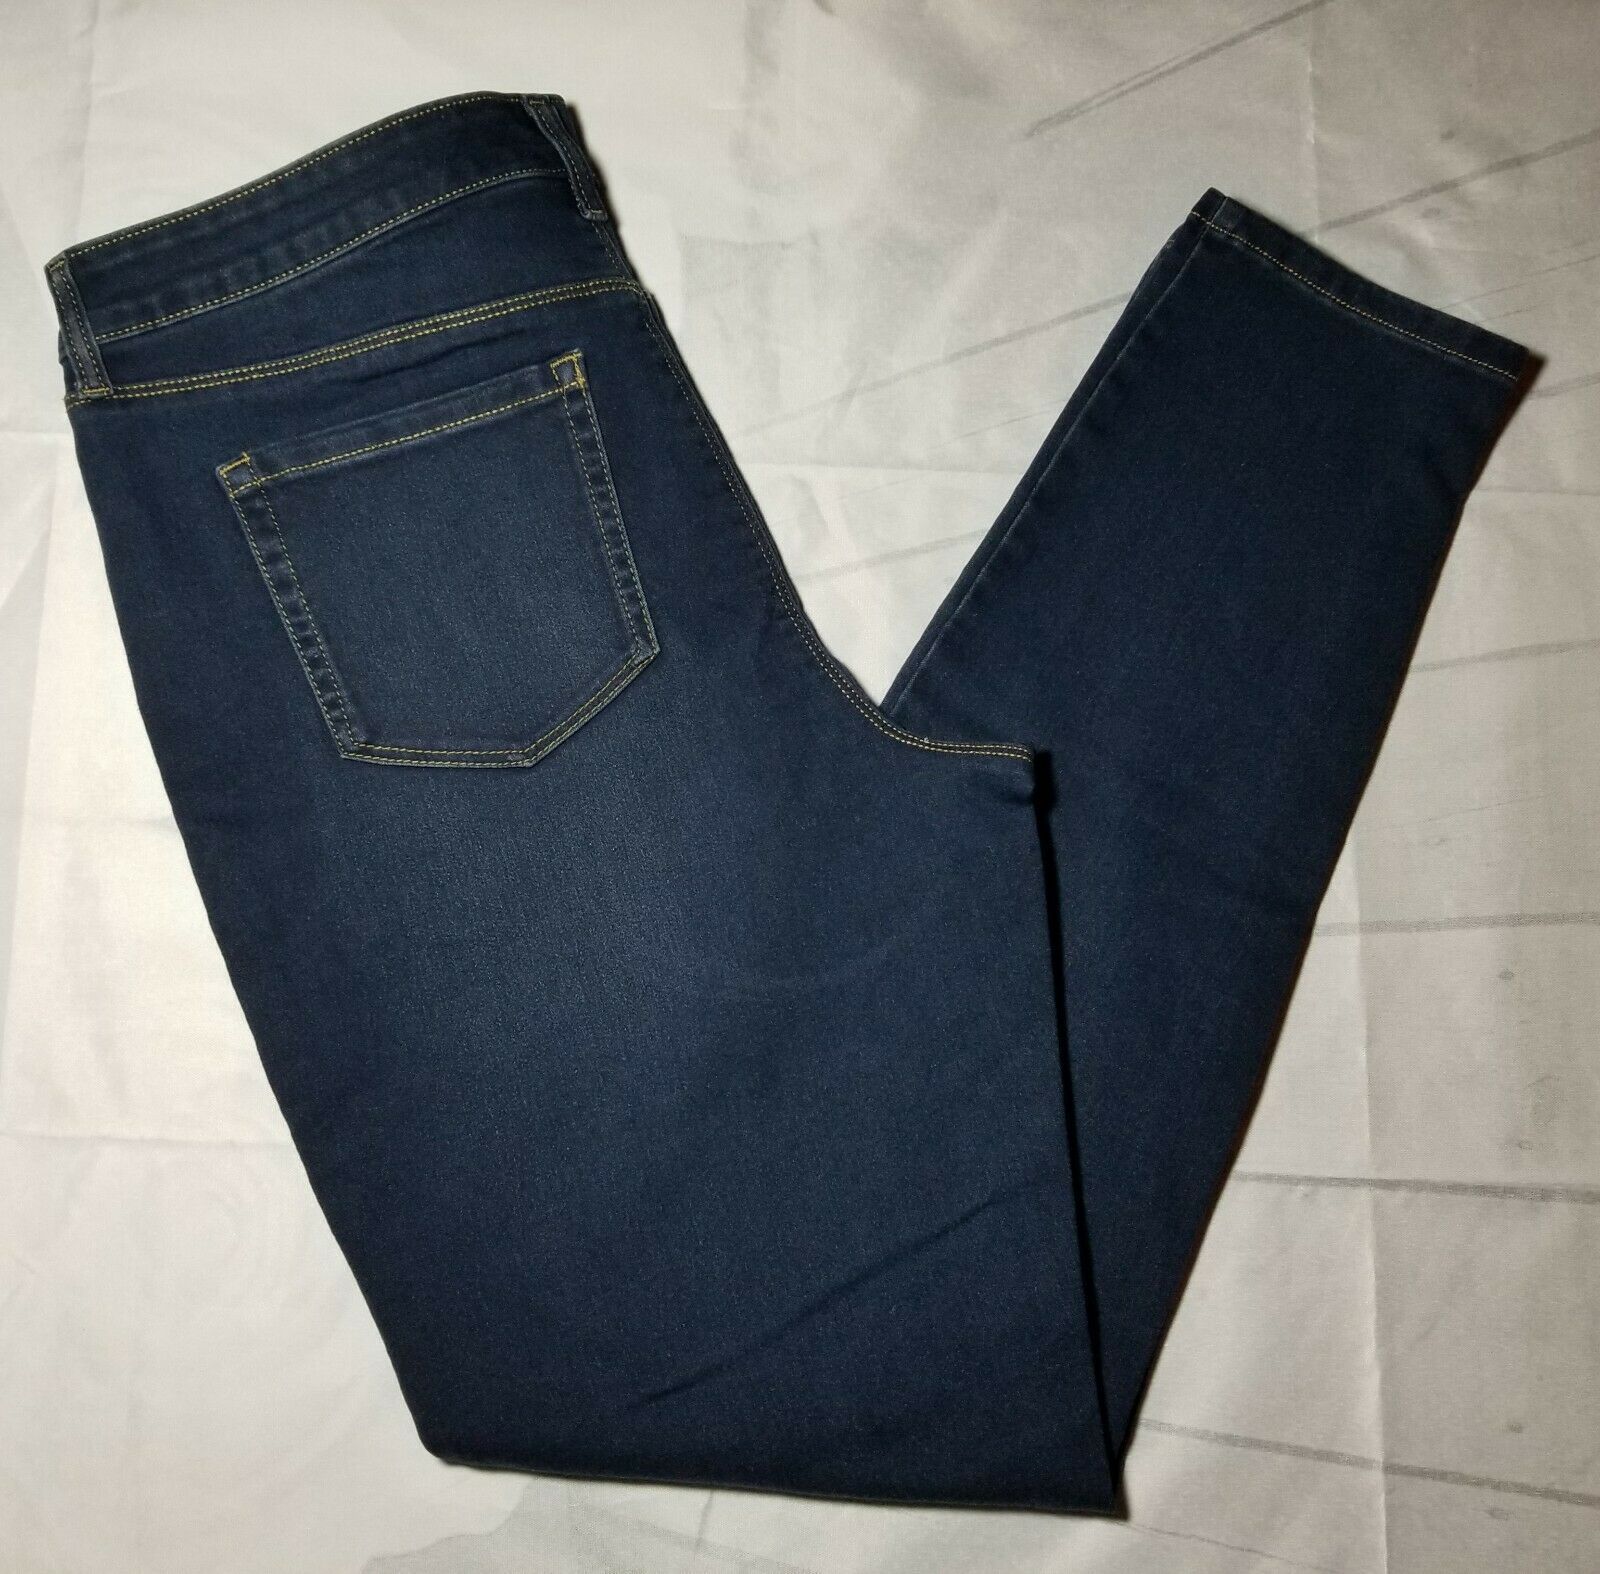 style & co slim leg jeans